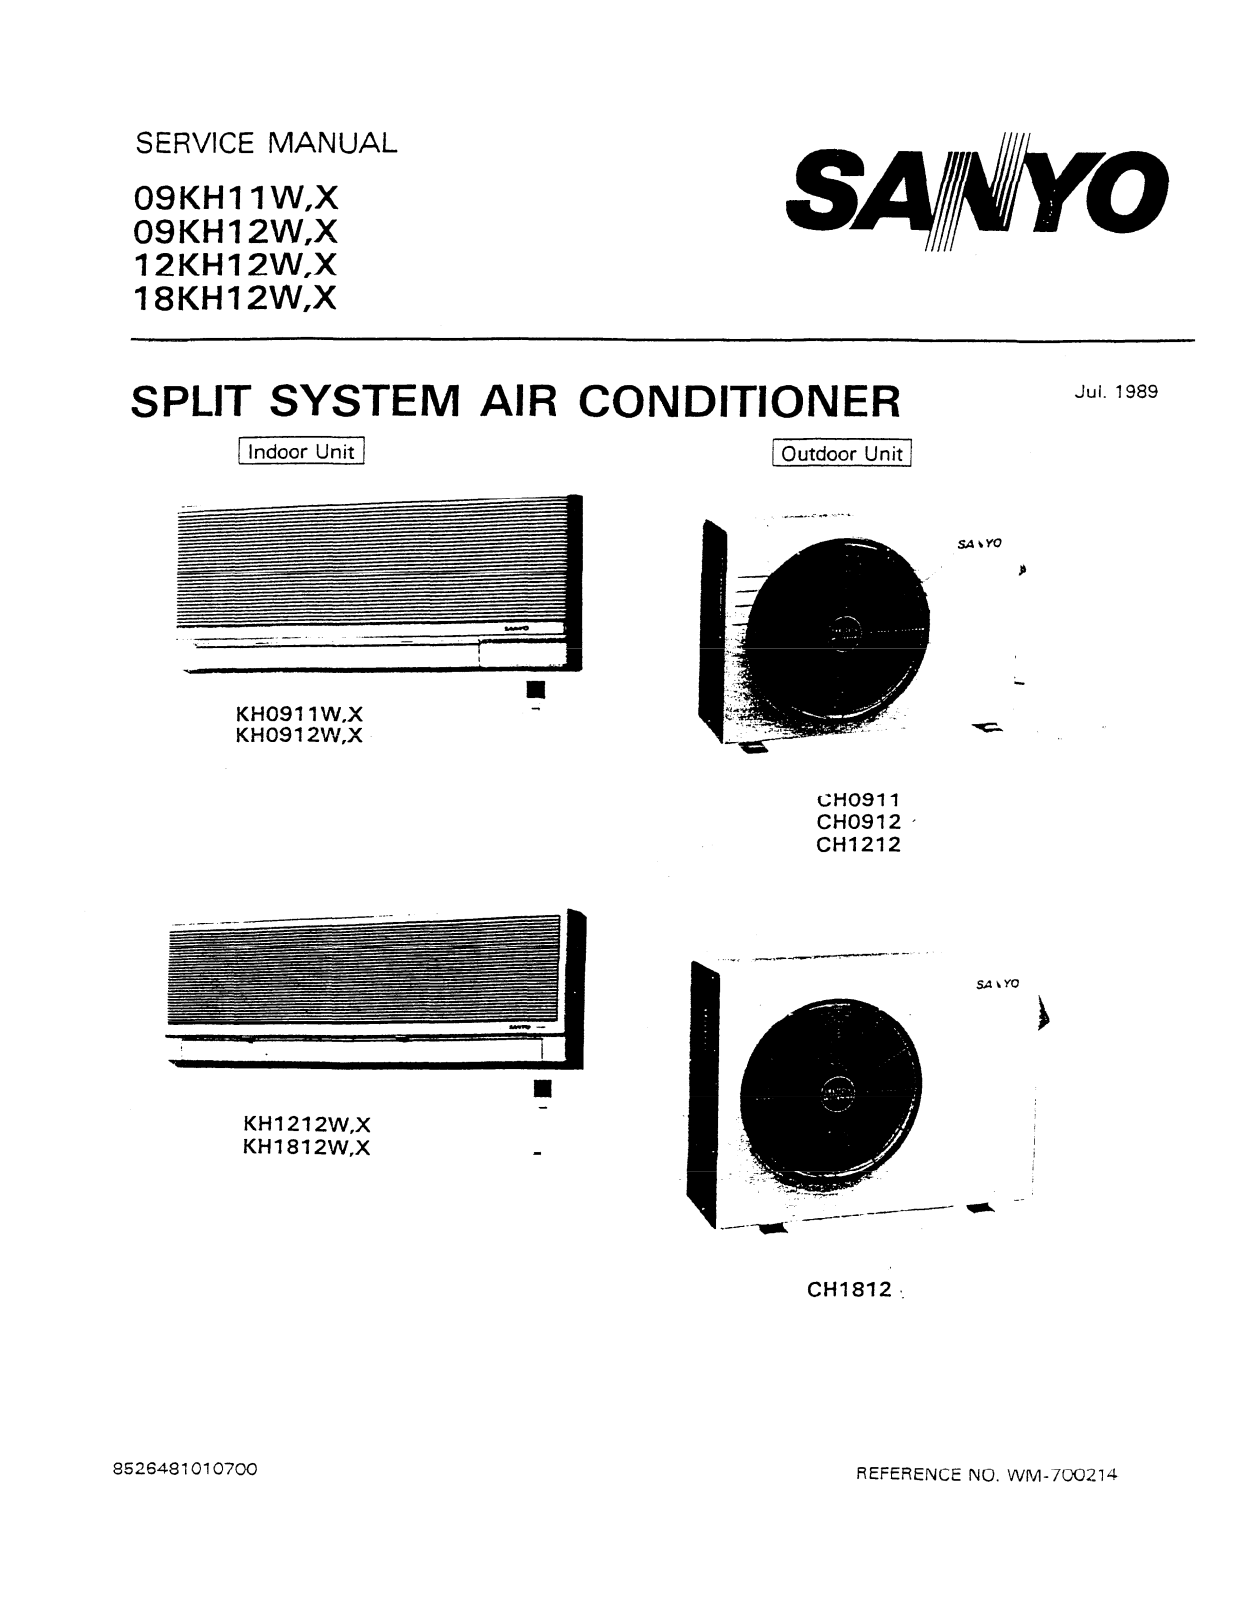 Sanyo 18KH12X, 18KH12W, 12KH12X, 12KH12W, 09KH12X Service Manual